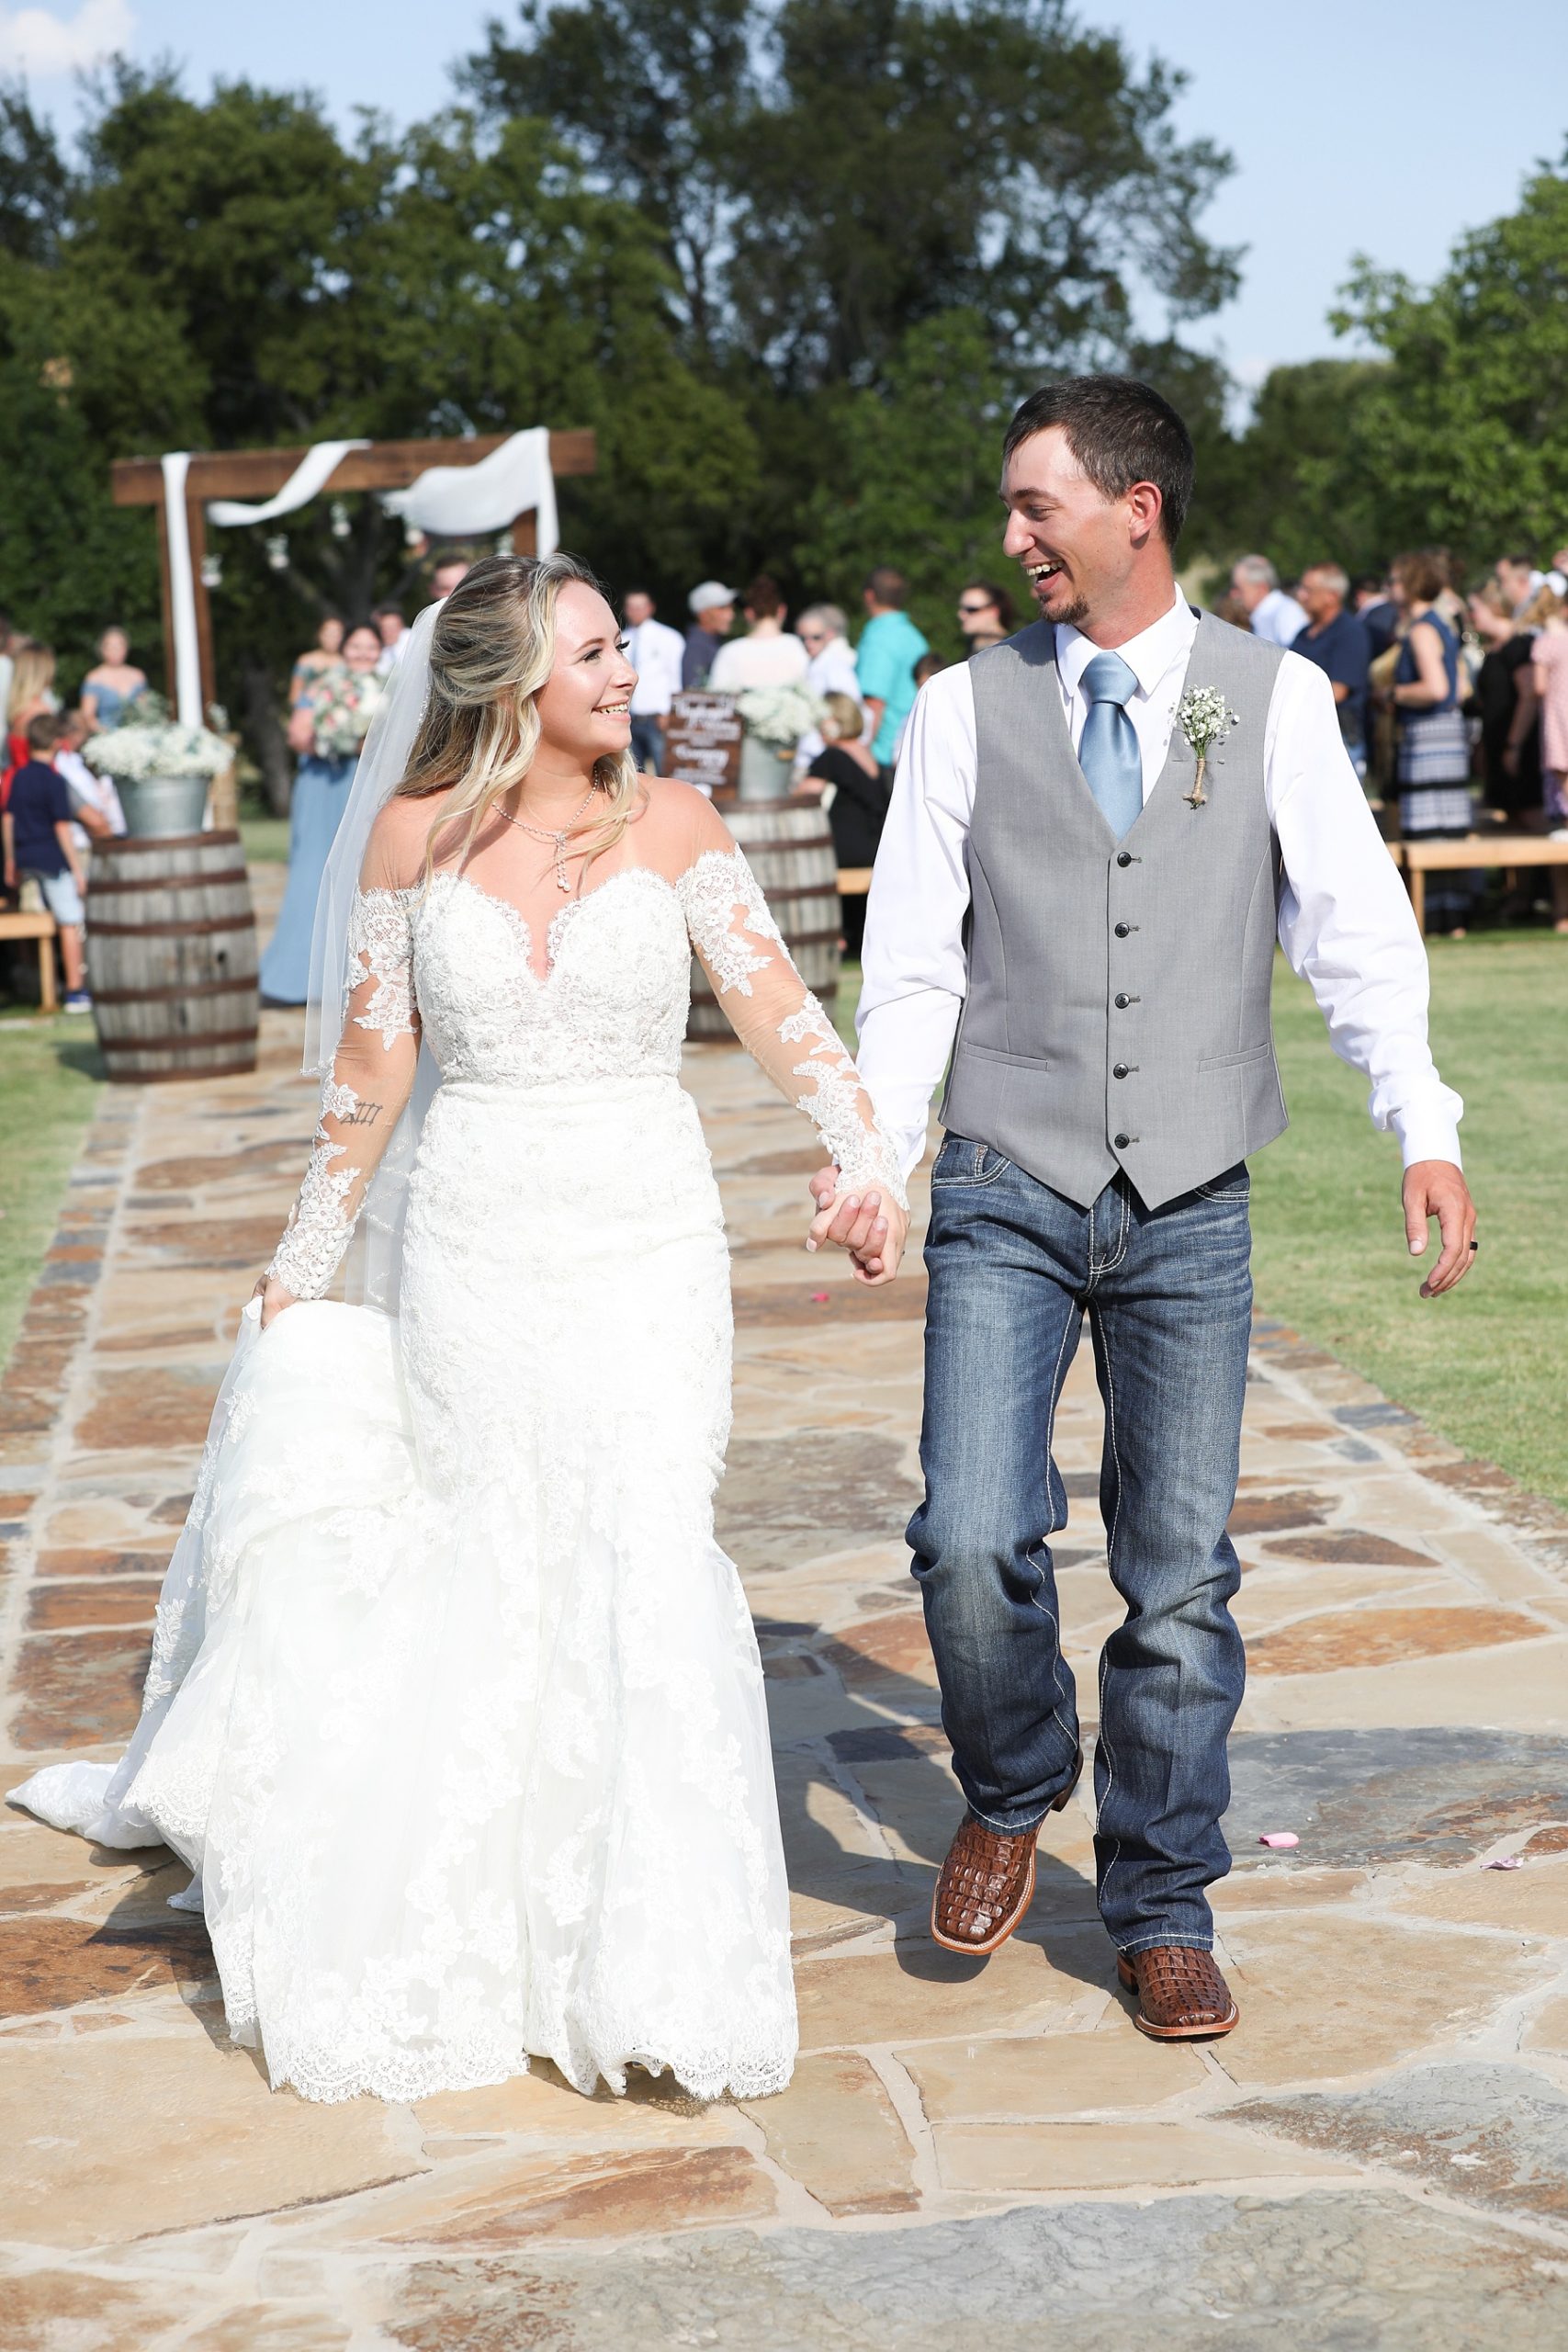 Randi Michelle Weddings captures bride and groom walking up aisle